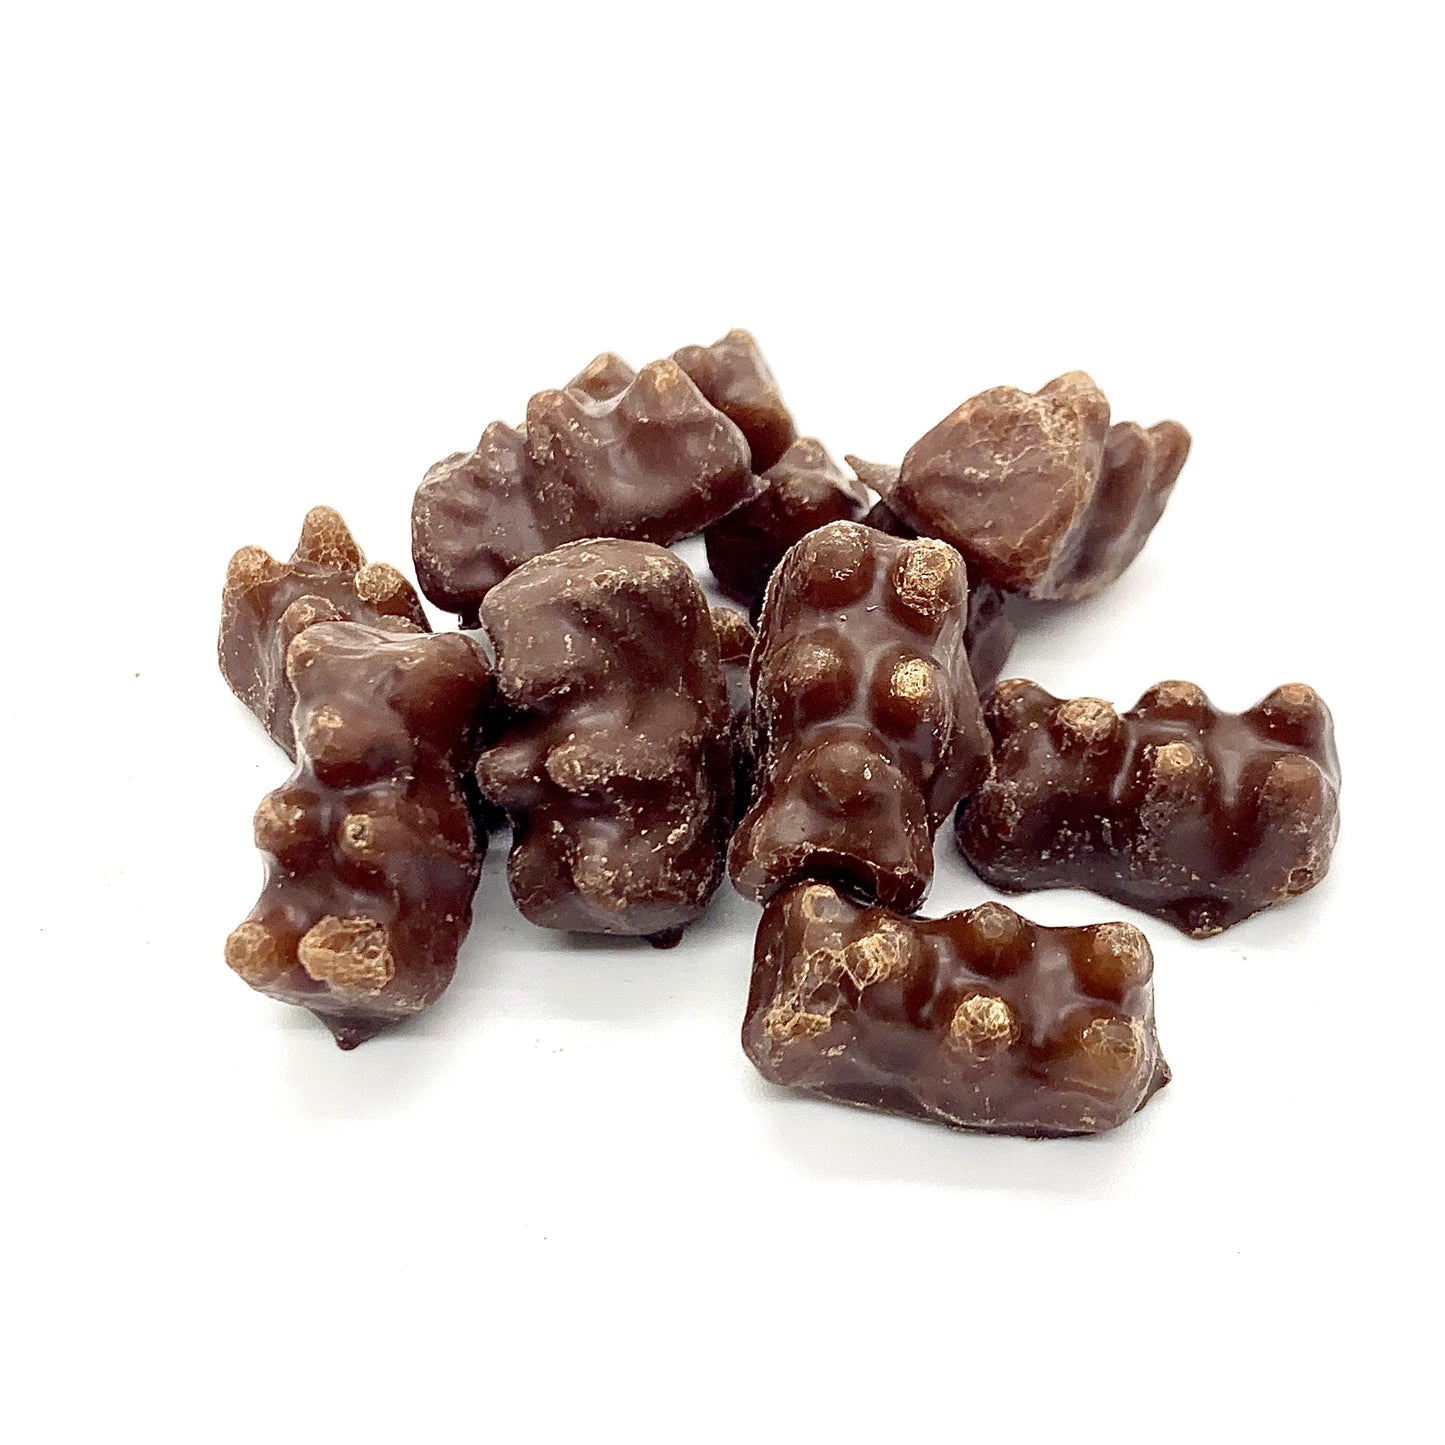 Chocolate Gummy Bears - Wholesale Unlimited Inc.